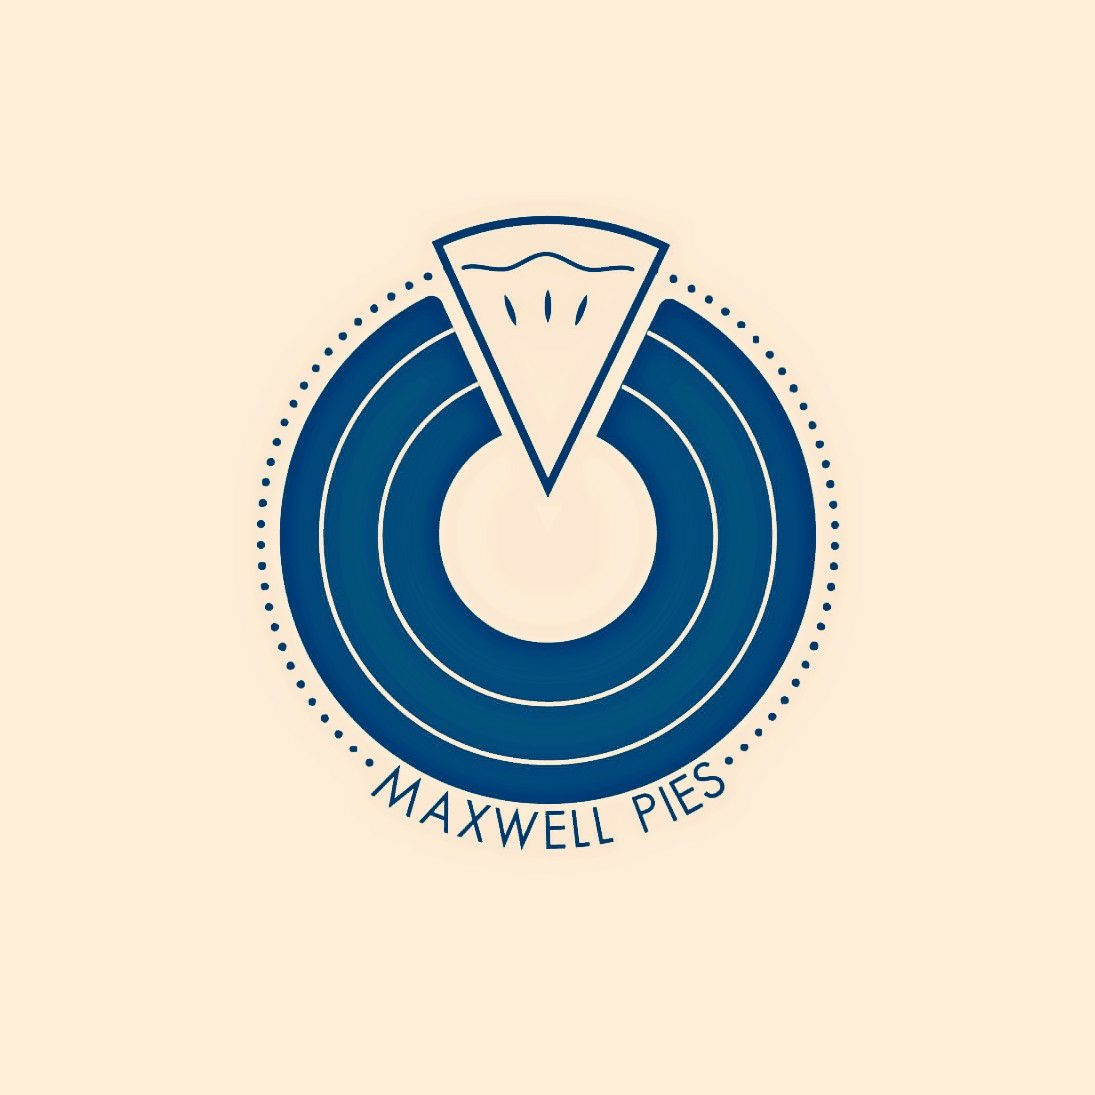 Maxwell Pies